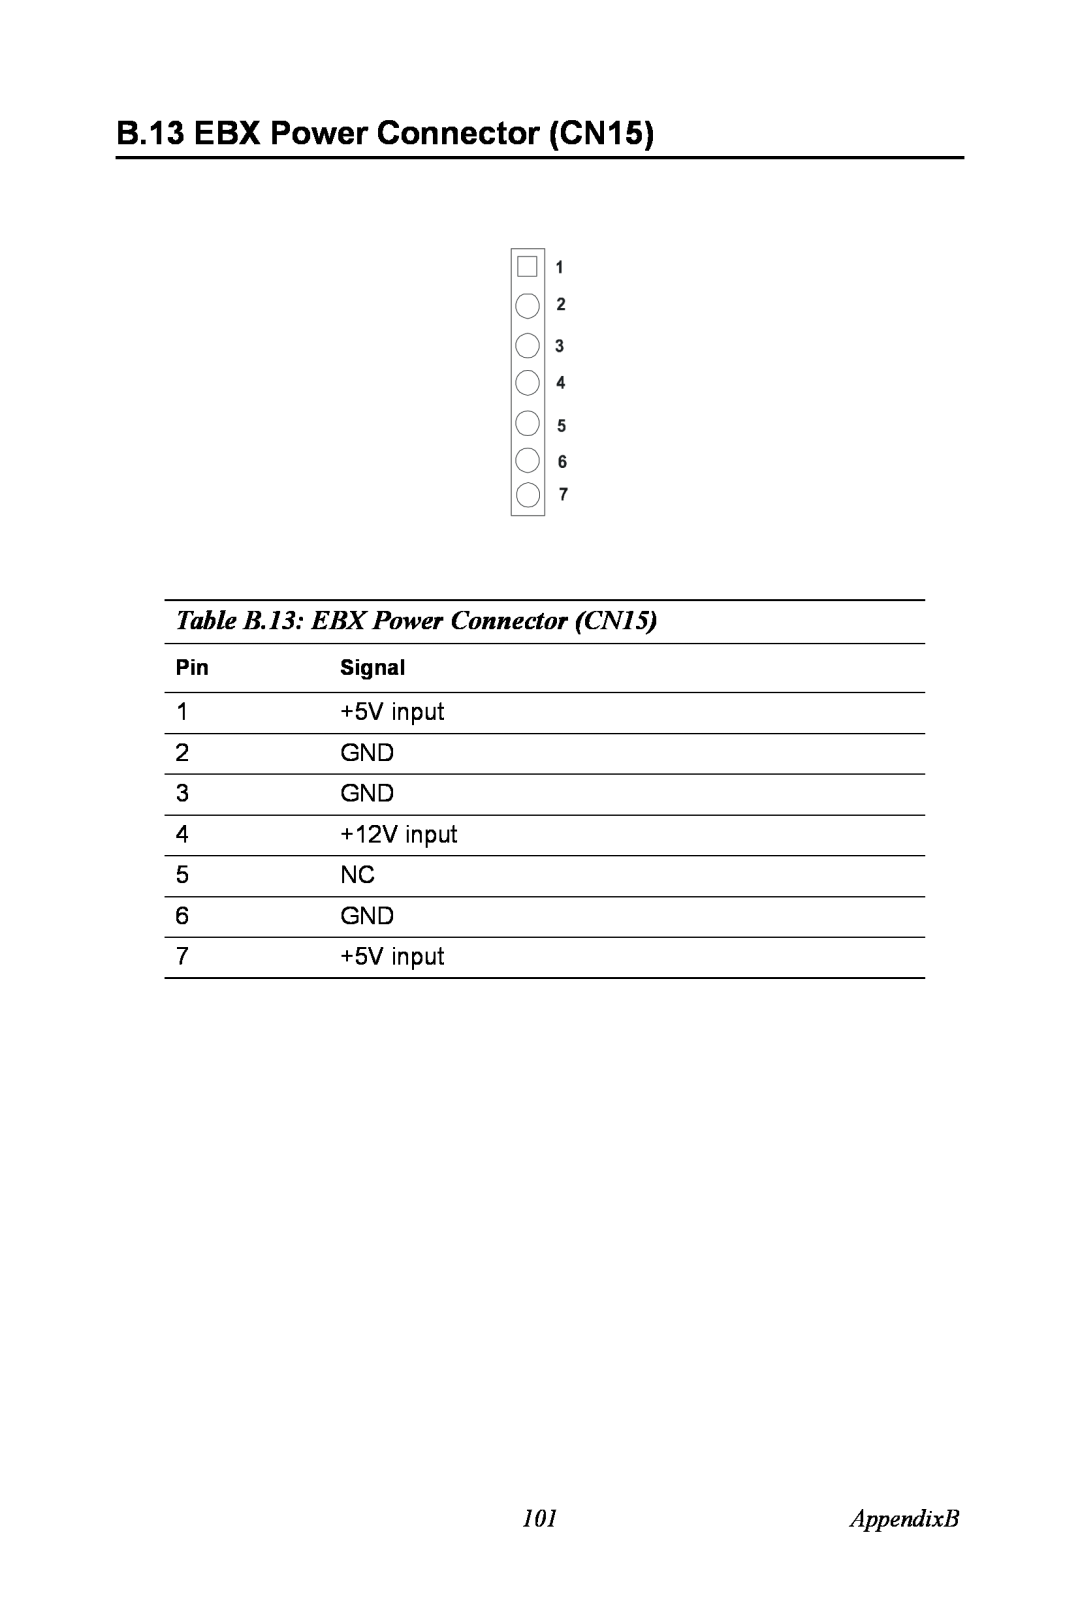 Advantech PCA-6774 user manual Table B.13 EBX Power Connector CN15, AppendixB, PinSignal 